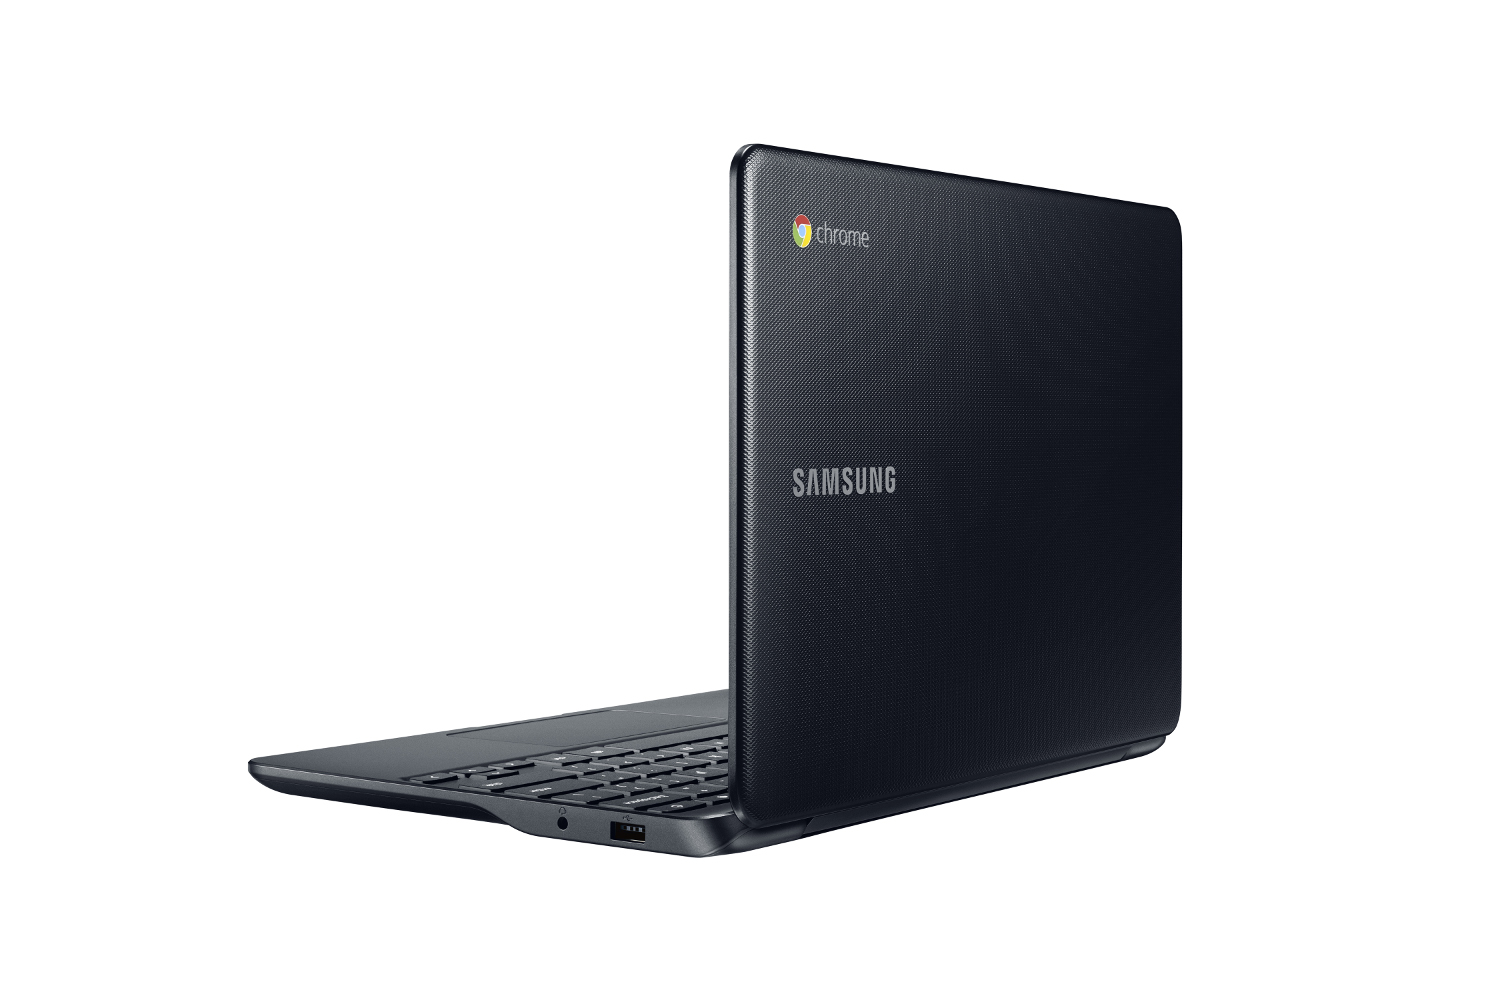 Samsung Chromebook 3 back